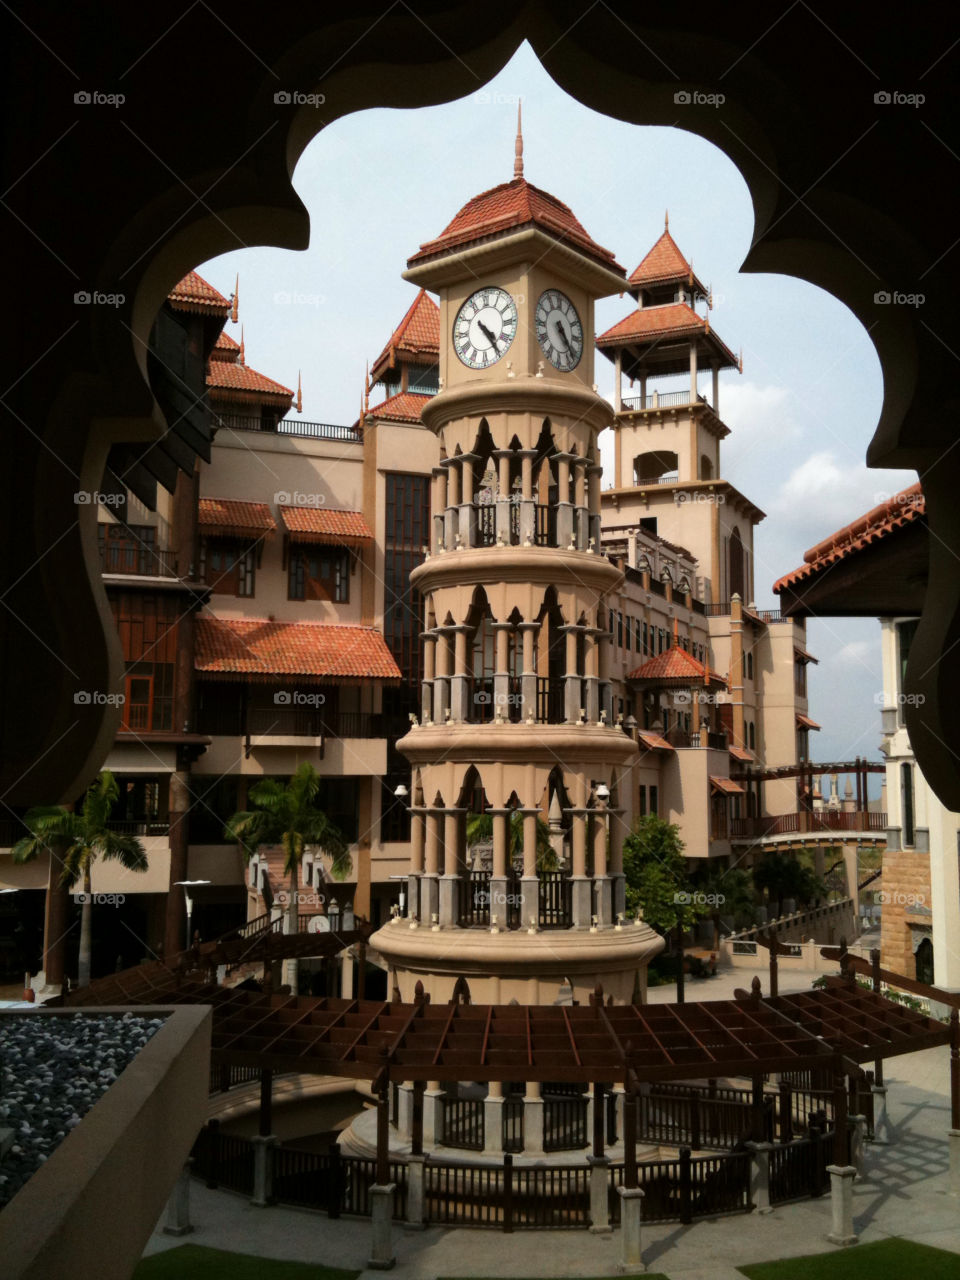 travel buildings hotel clock by jidin